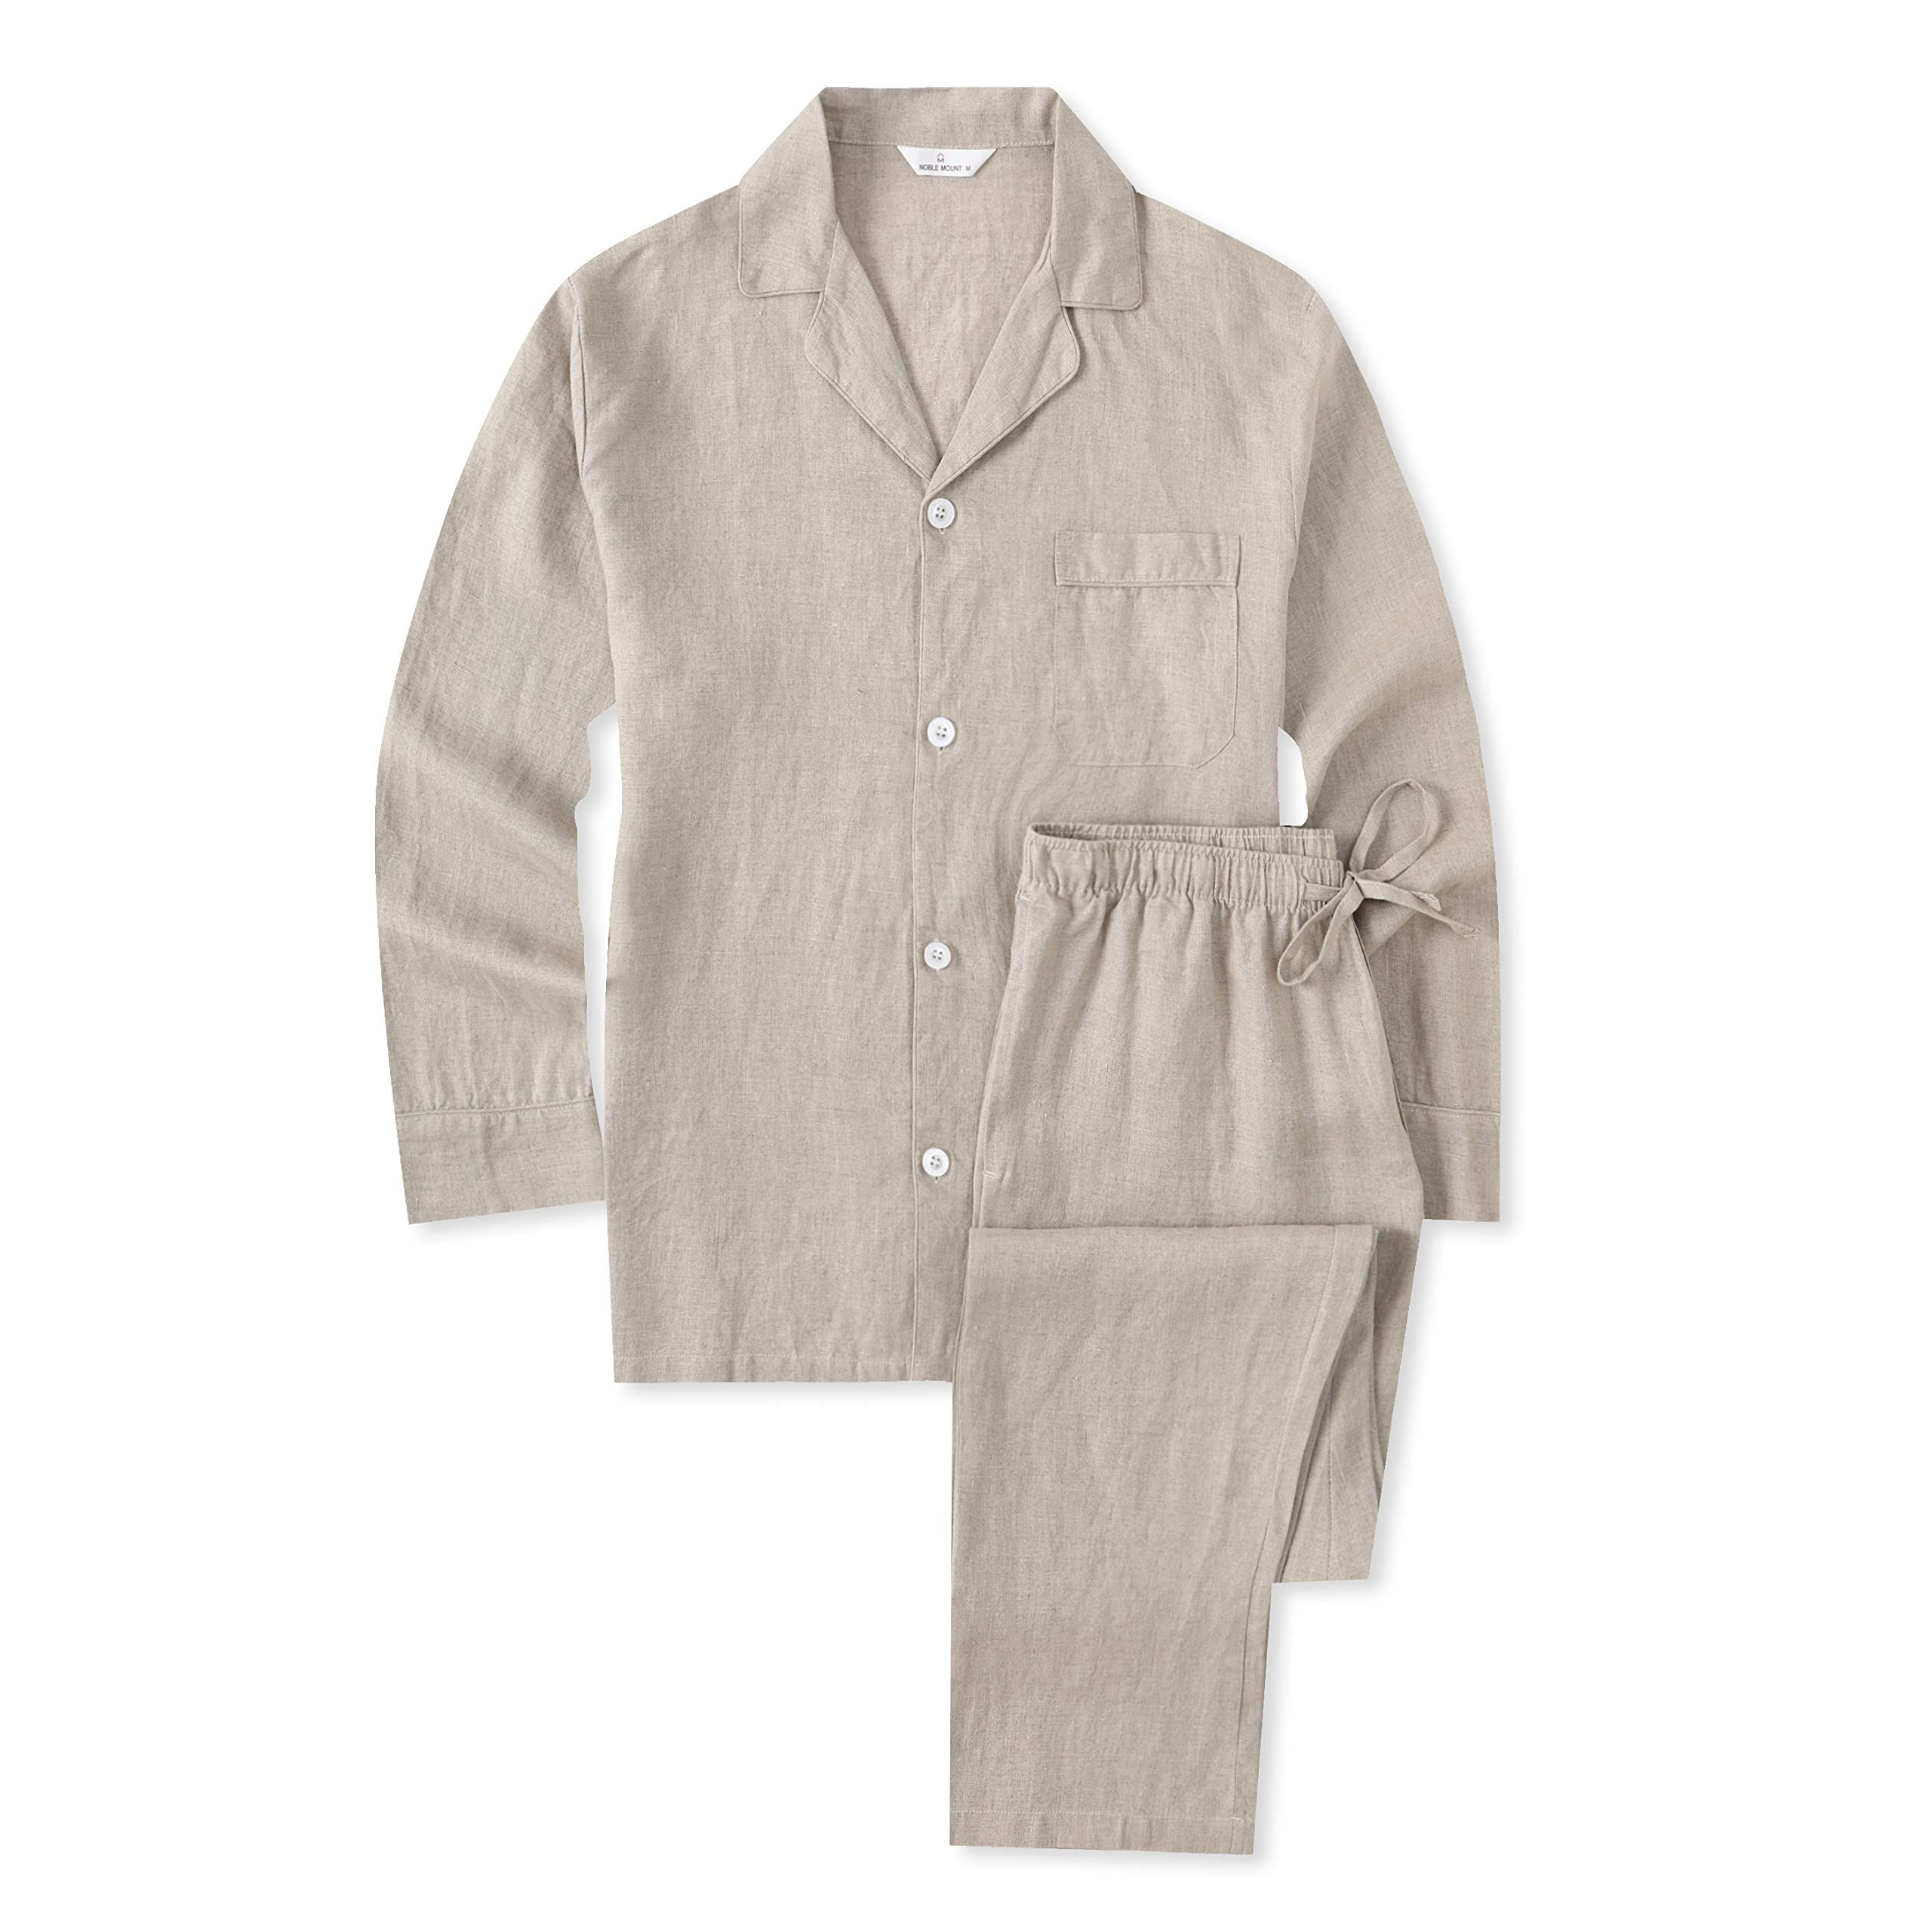 Noble Mount 100% Linen Men's Pajama Set for Summer - Belgian Linen